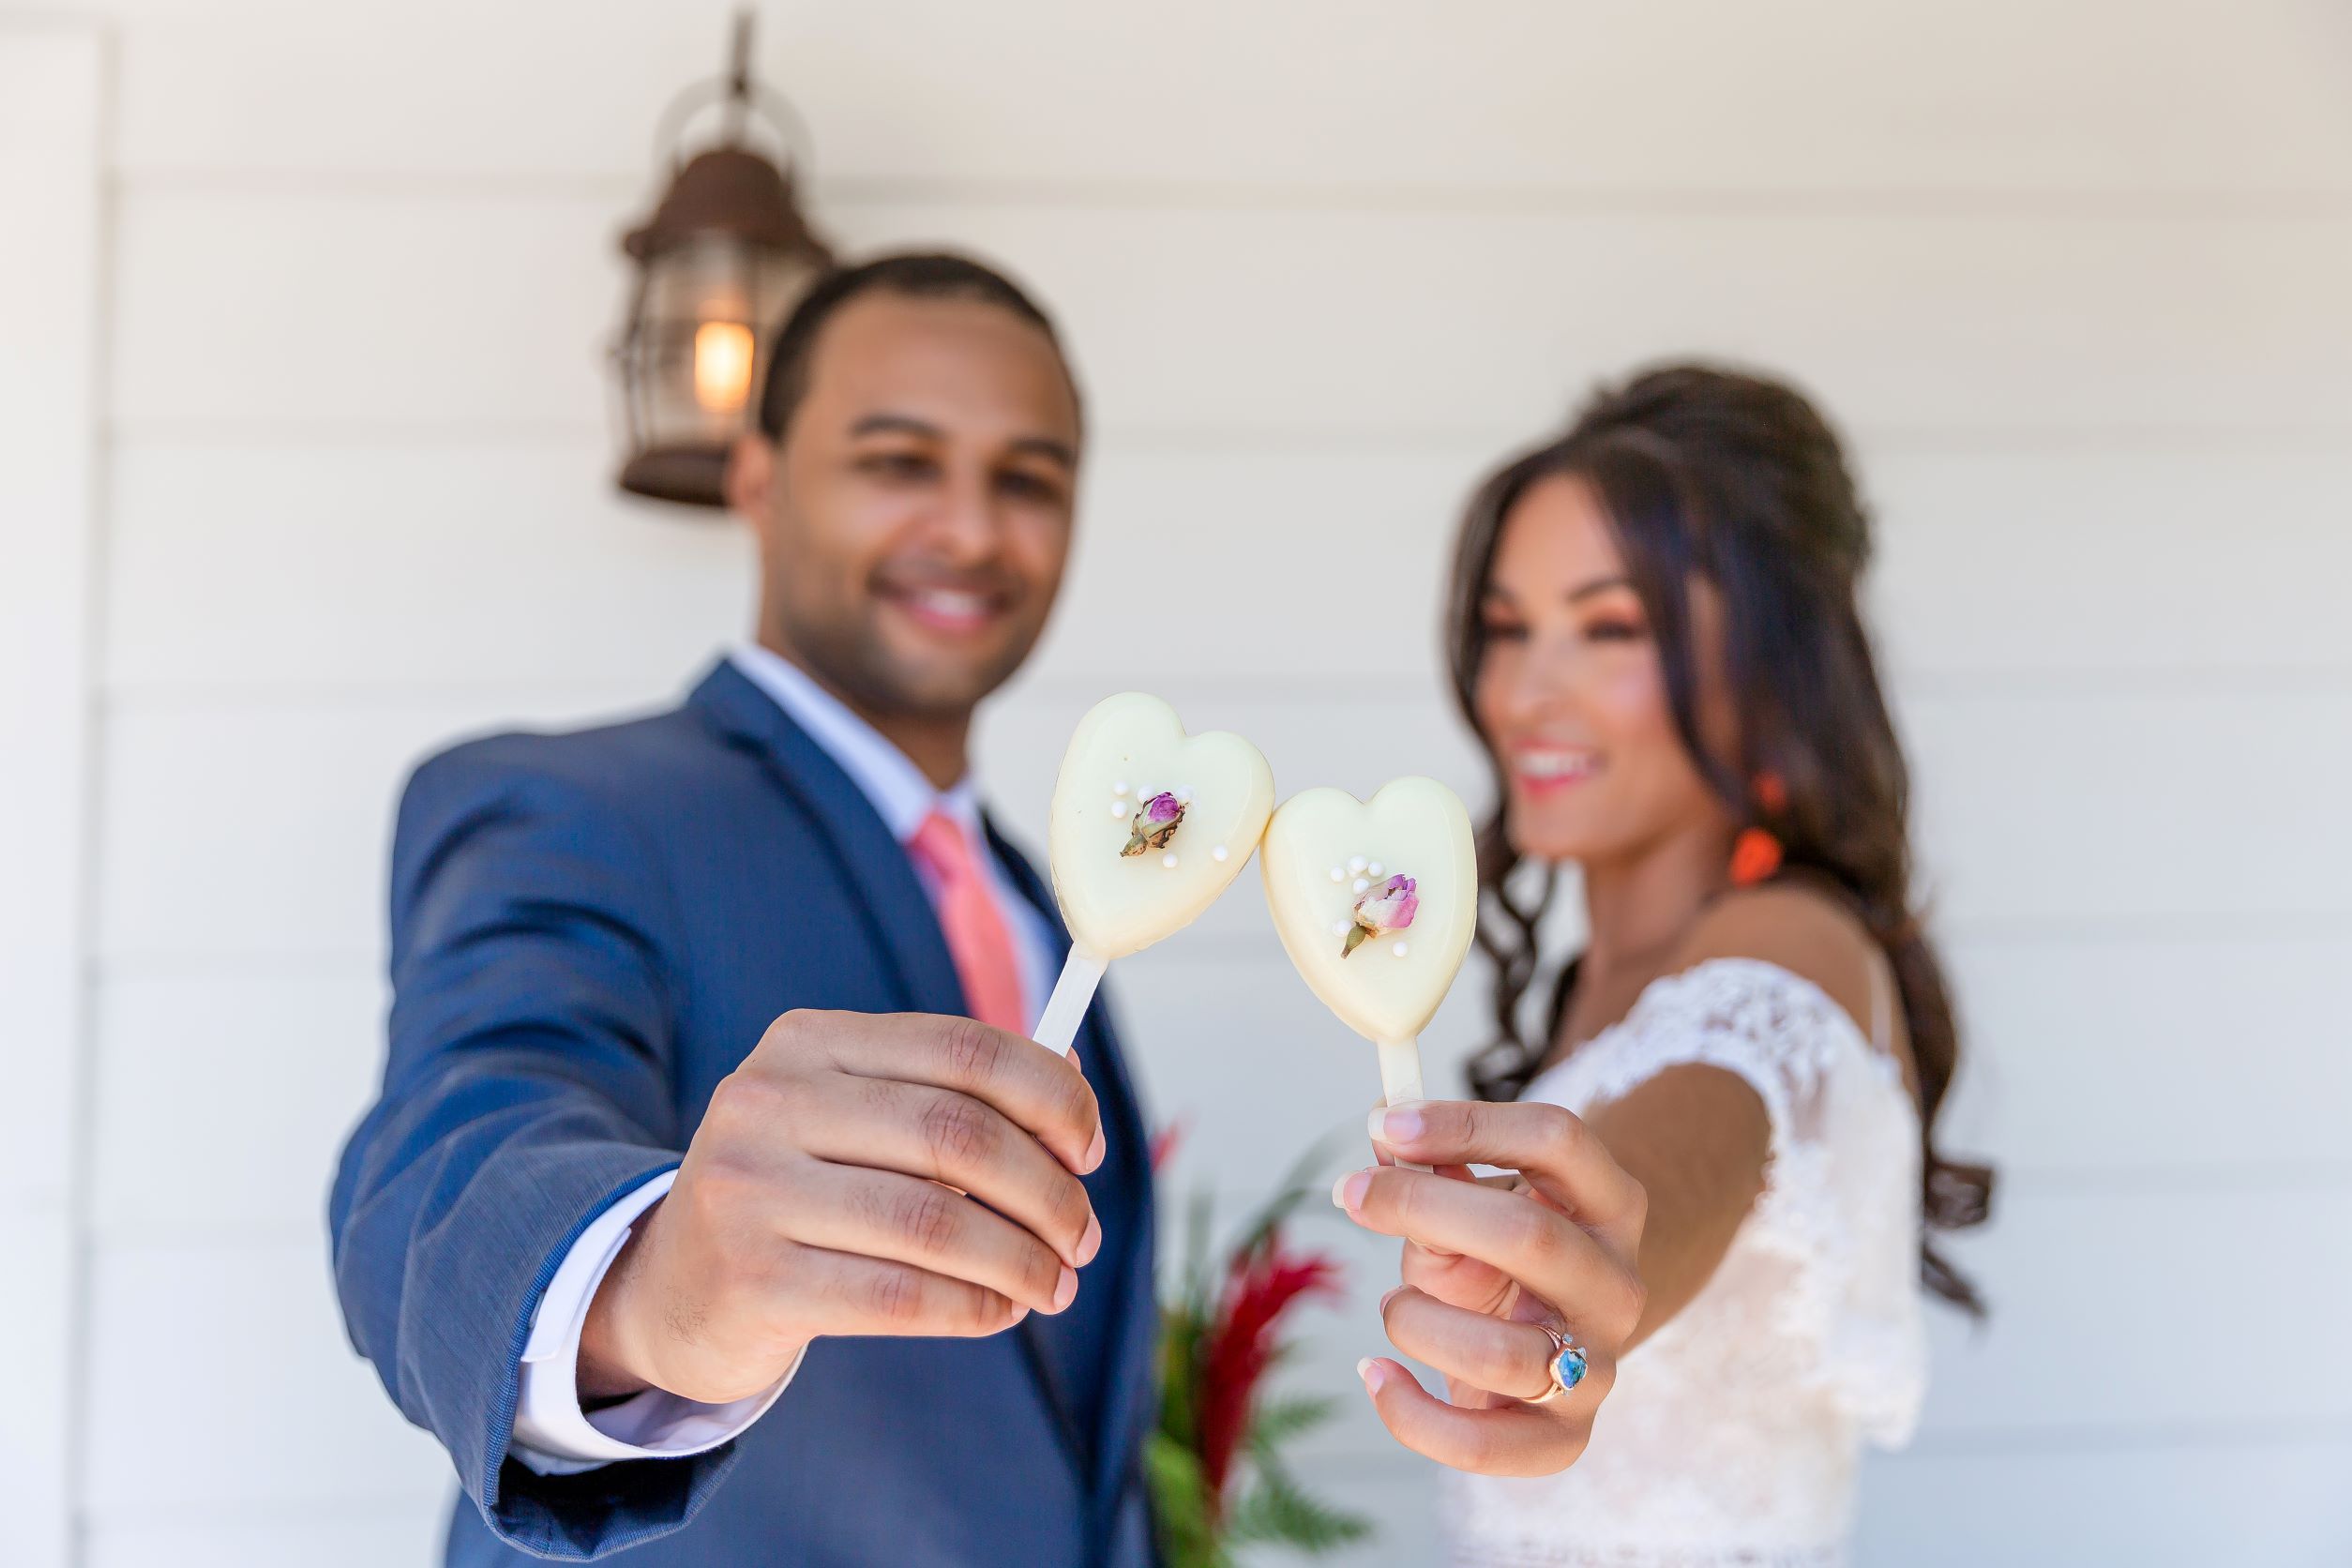 groom in blue tux, bride in wedding dress, holding heart shaped cake-pops